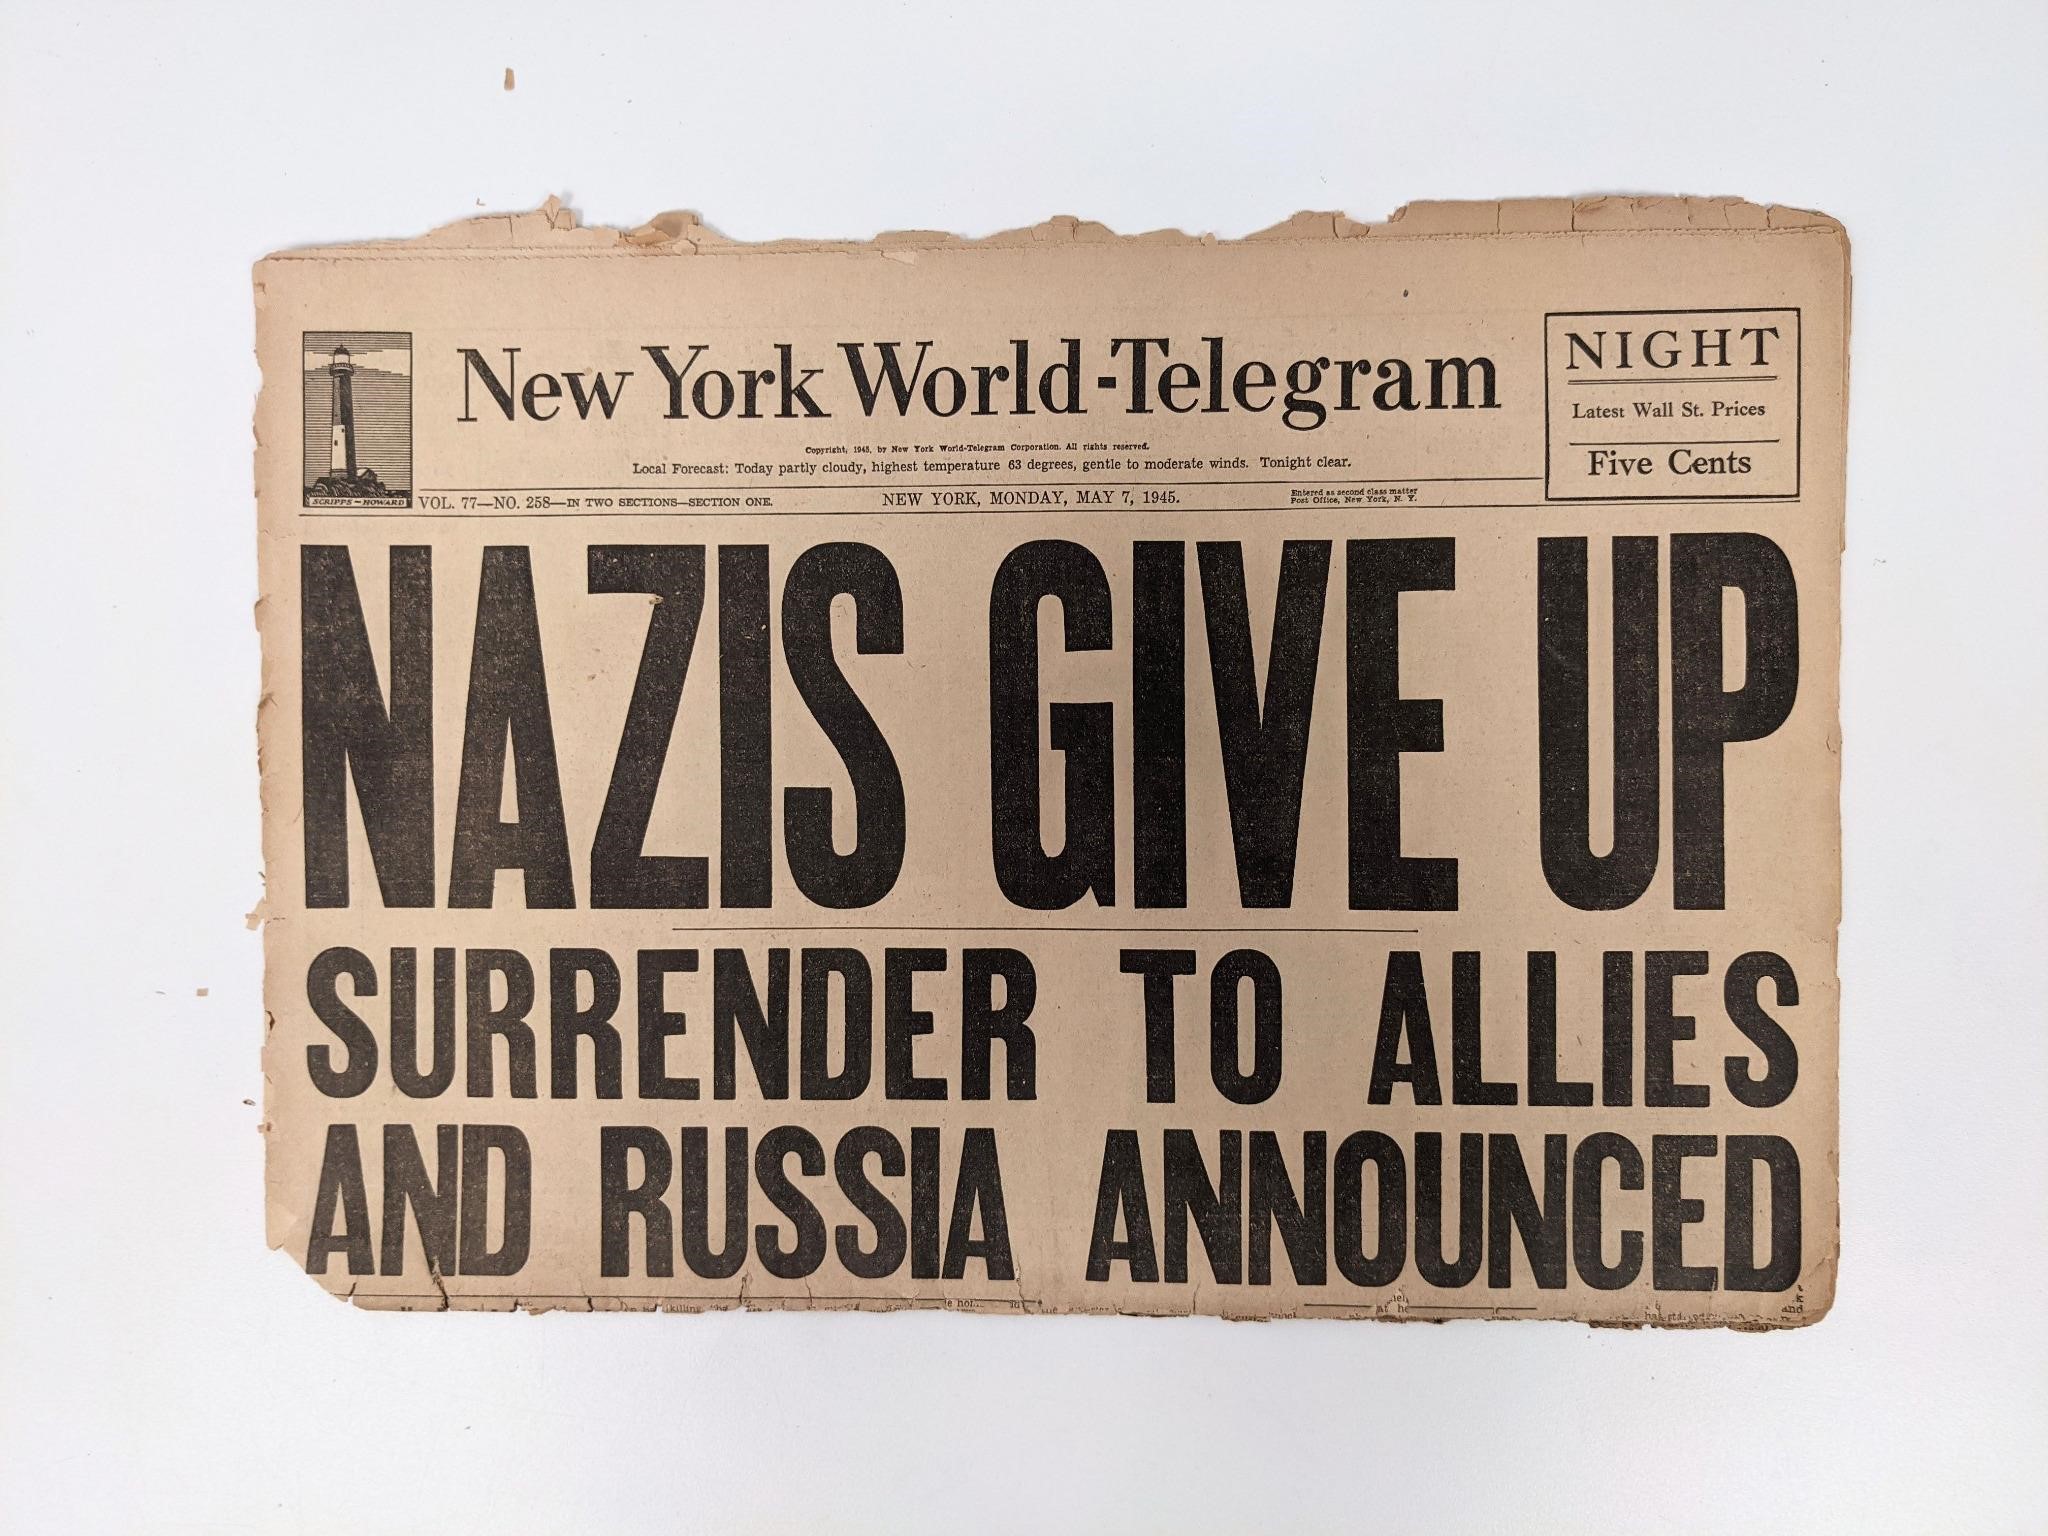 New York World Telegram 1945 Vintage Newspaper